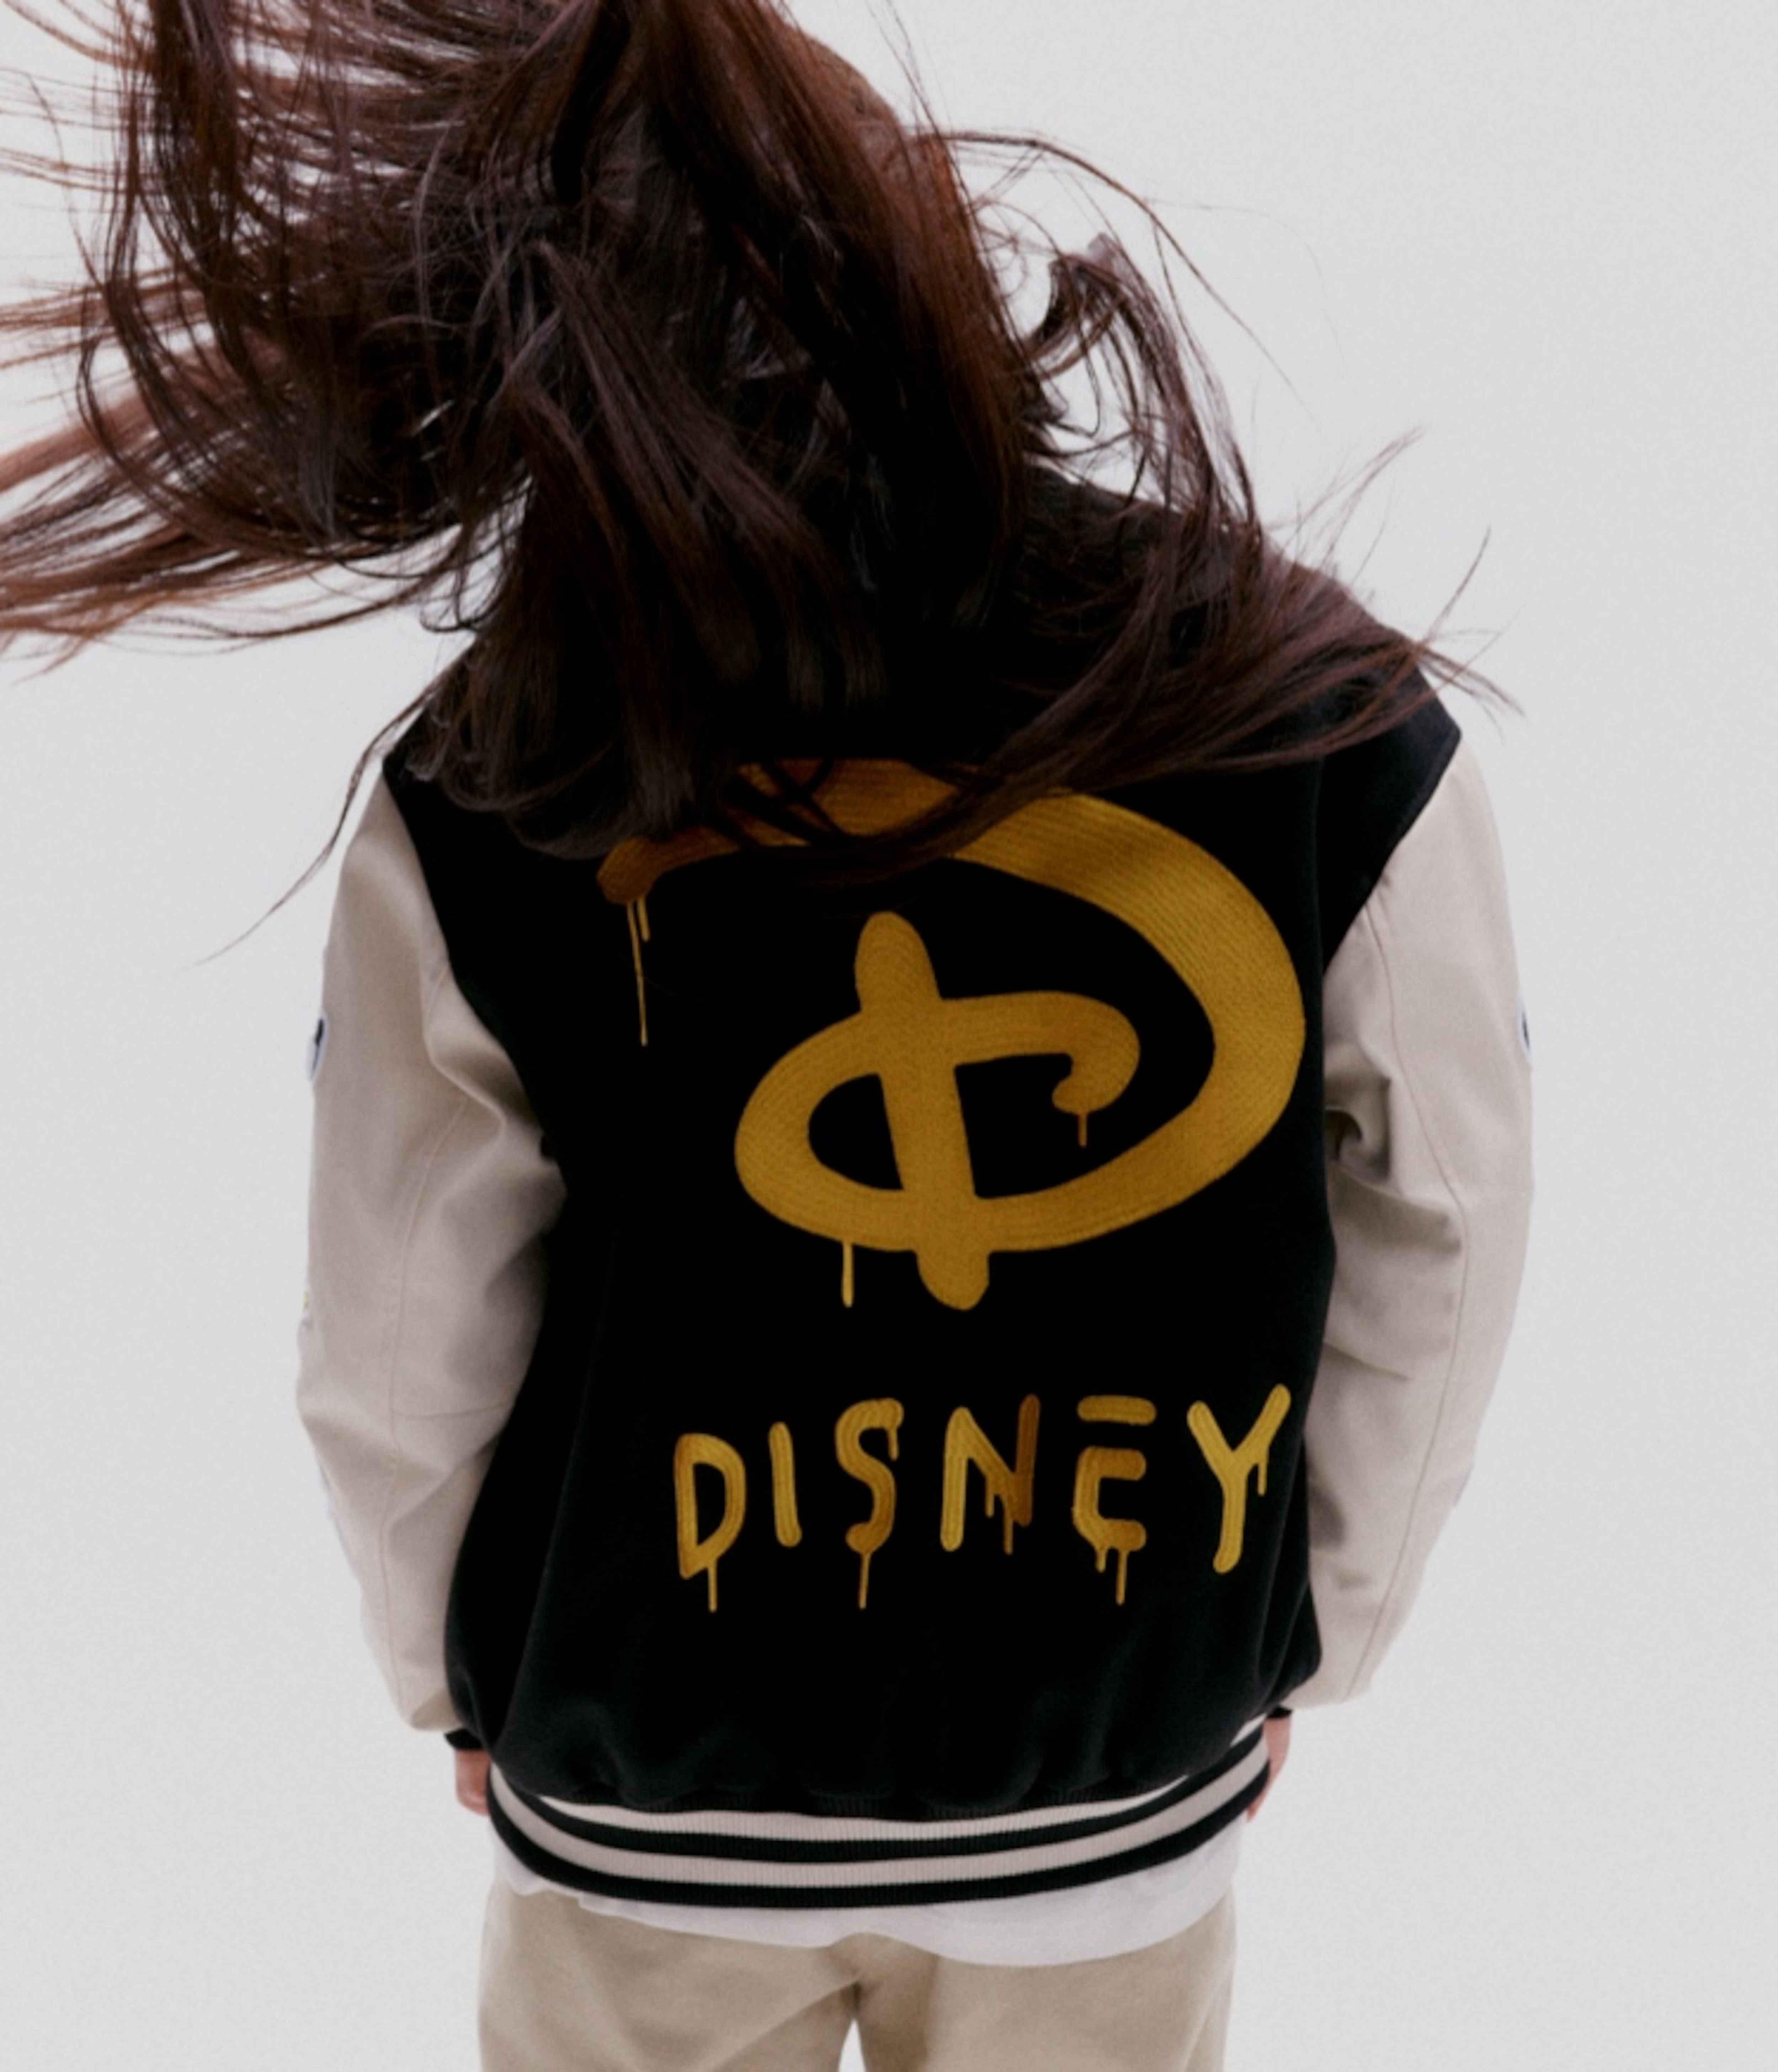 Disney100 x H&M | Trevor Andrew | H&M